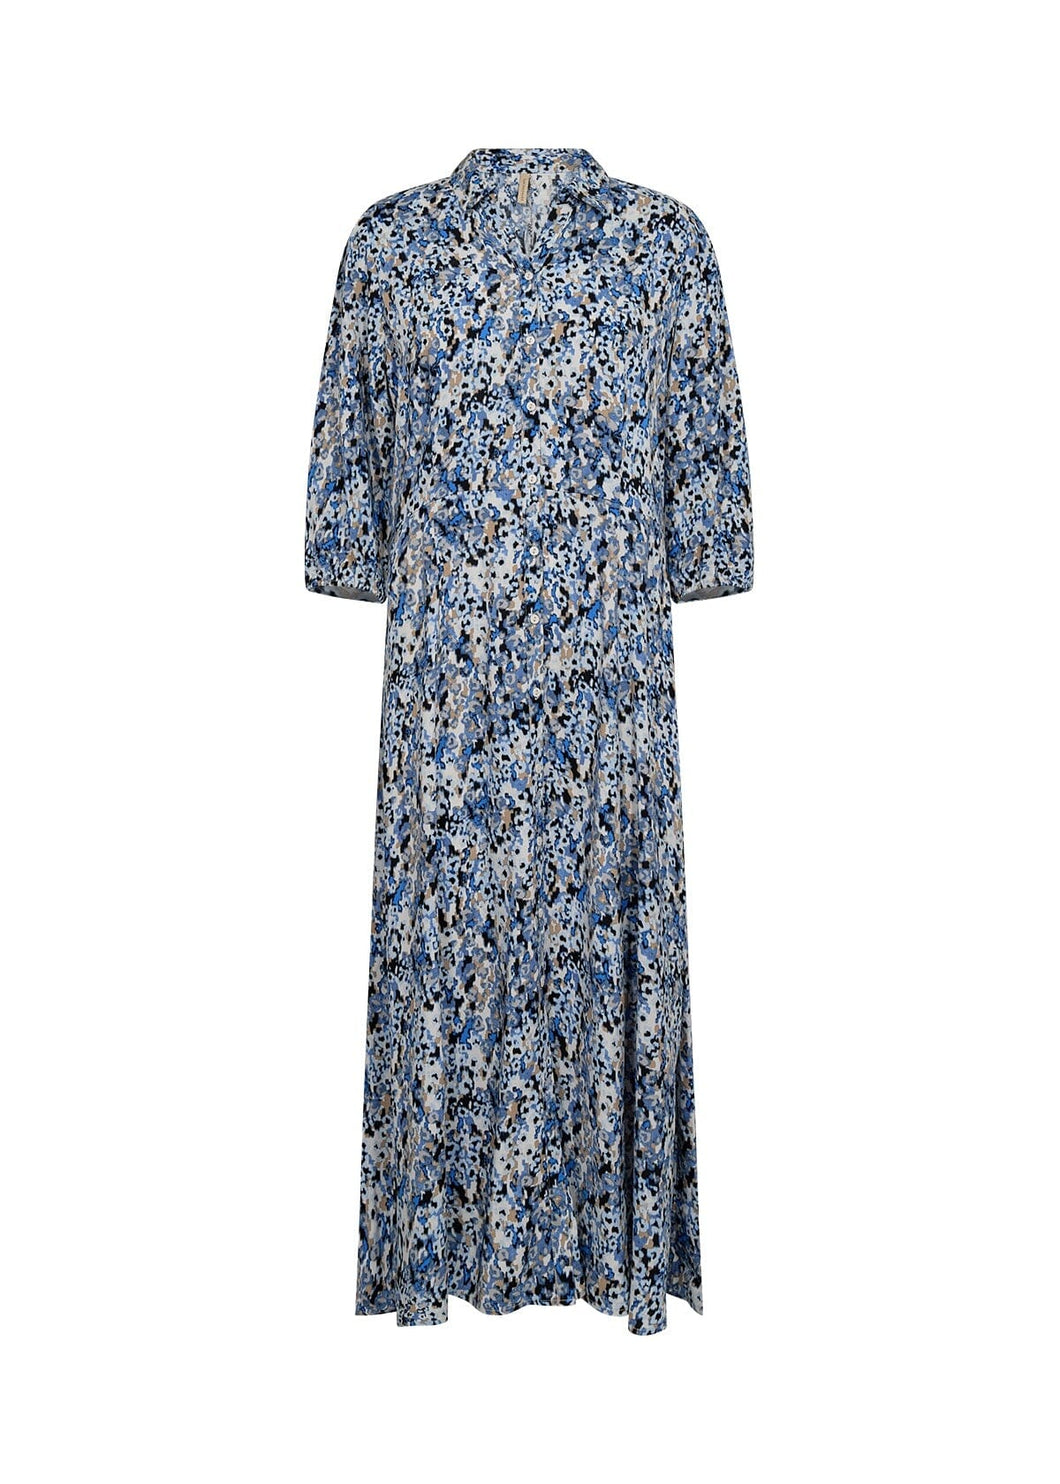 Minea Dress in Bright Blue Combi Dress Soyaconcept 